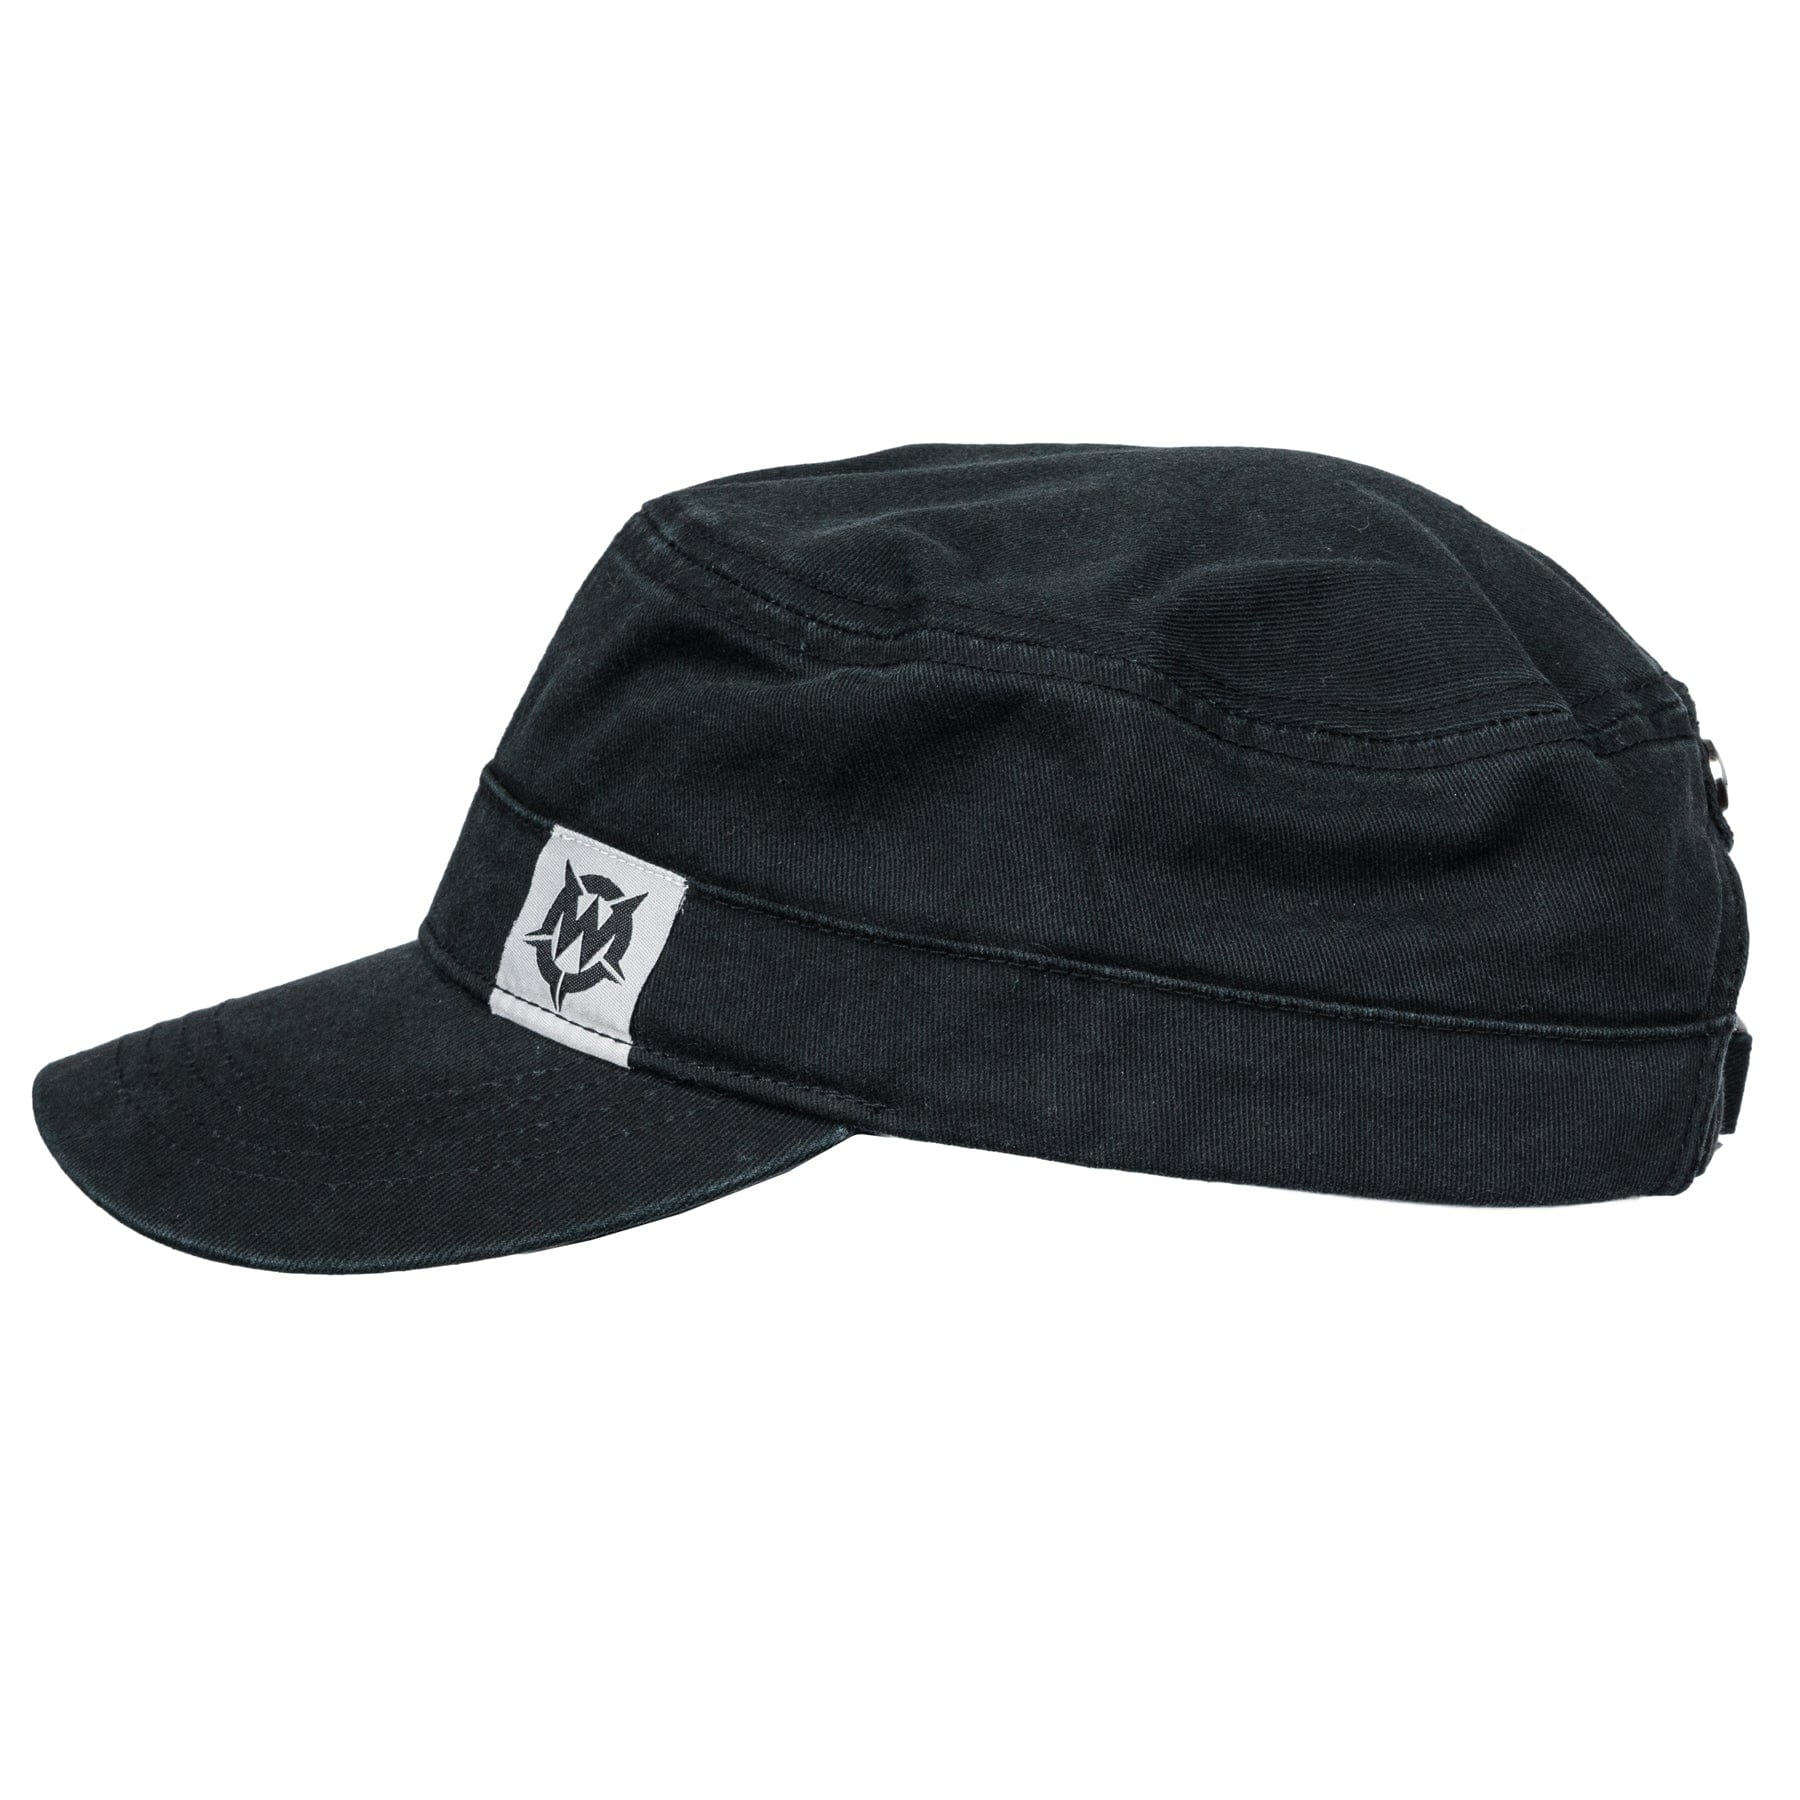 Wornstar Clothing Hat Commander Cadet Hat